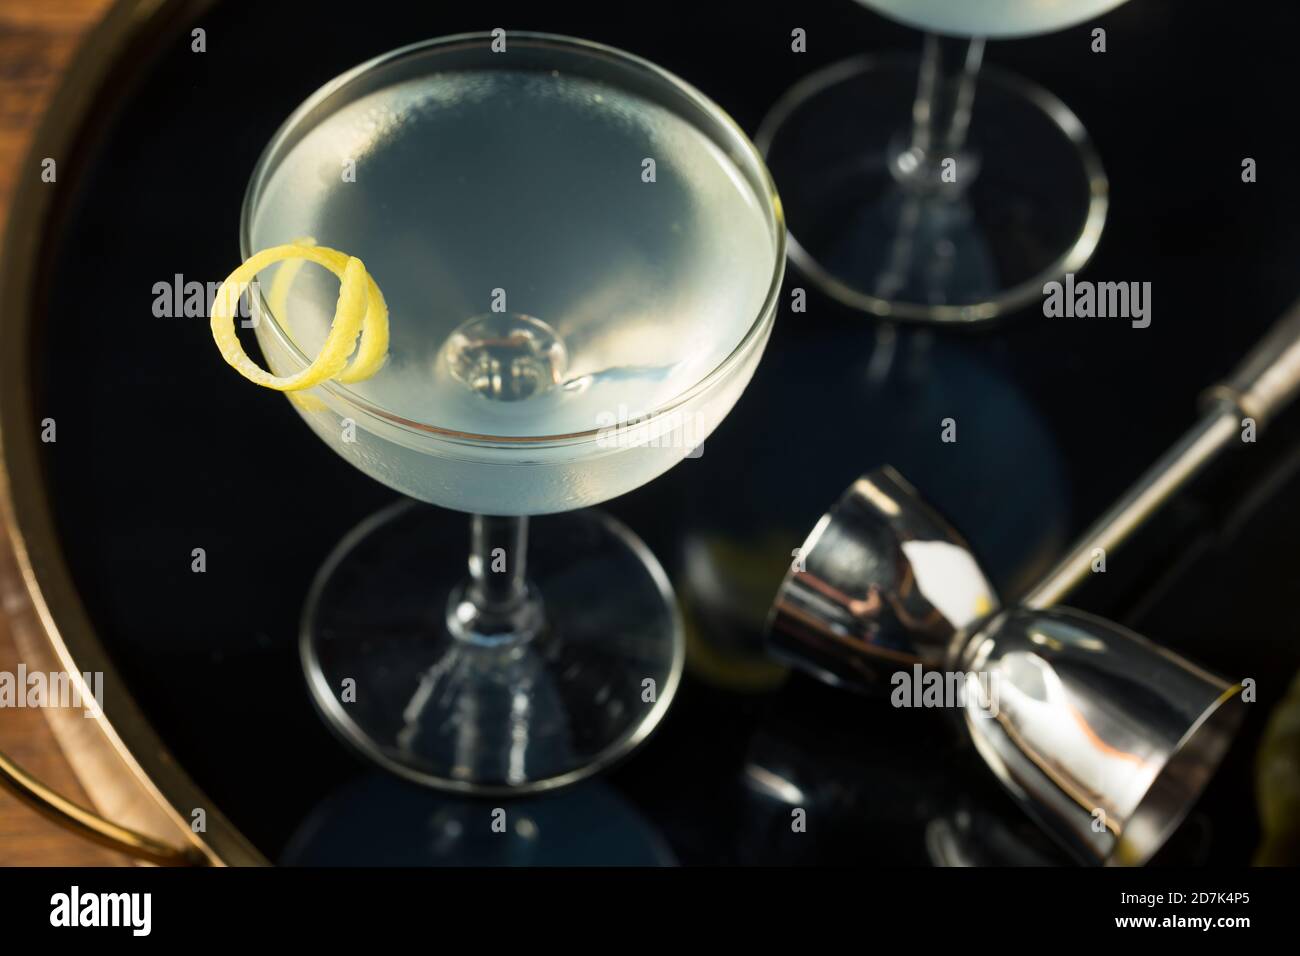 Homemade Dry Gin Martini with a Lemon Garnish Stock Photo